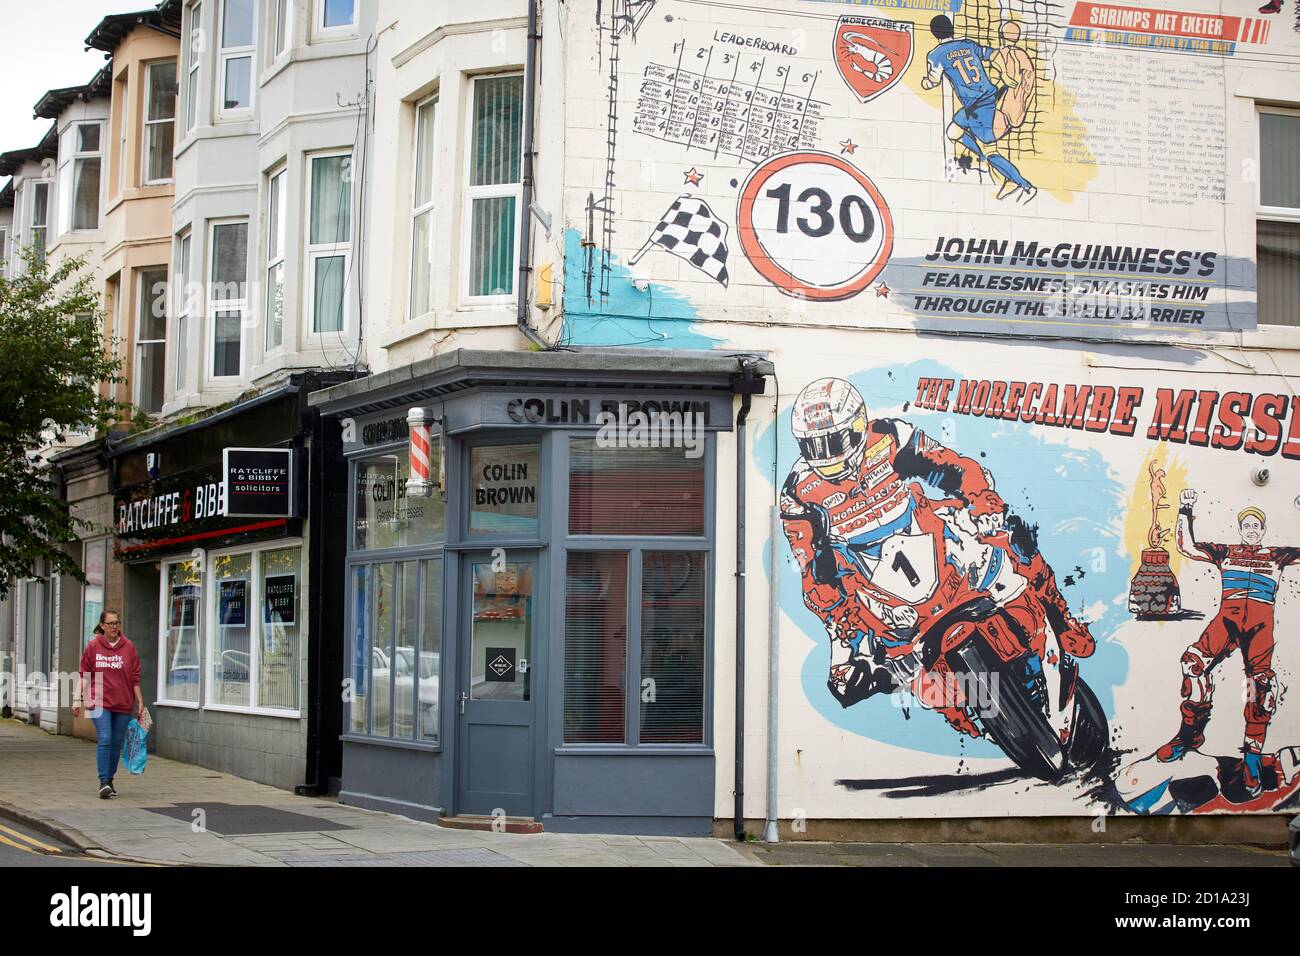 Morecambe Bay Lancashire John McGuinness ‘die Morecambe Missile’ Isle of Man TT Wandbild Projekt genannt Victoria Press von Illustrator Ben Tallon Stockfoto